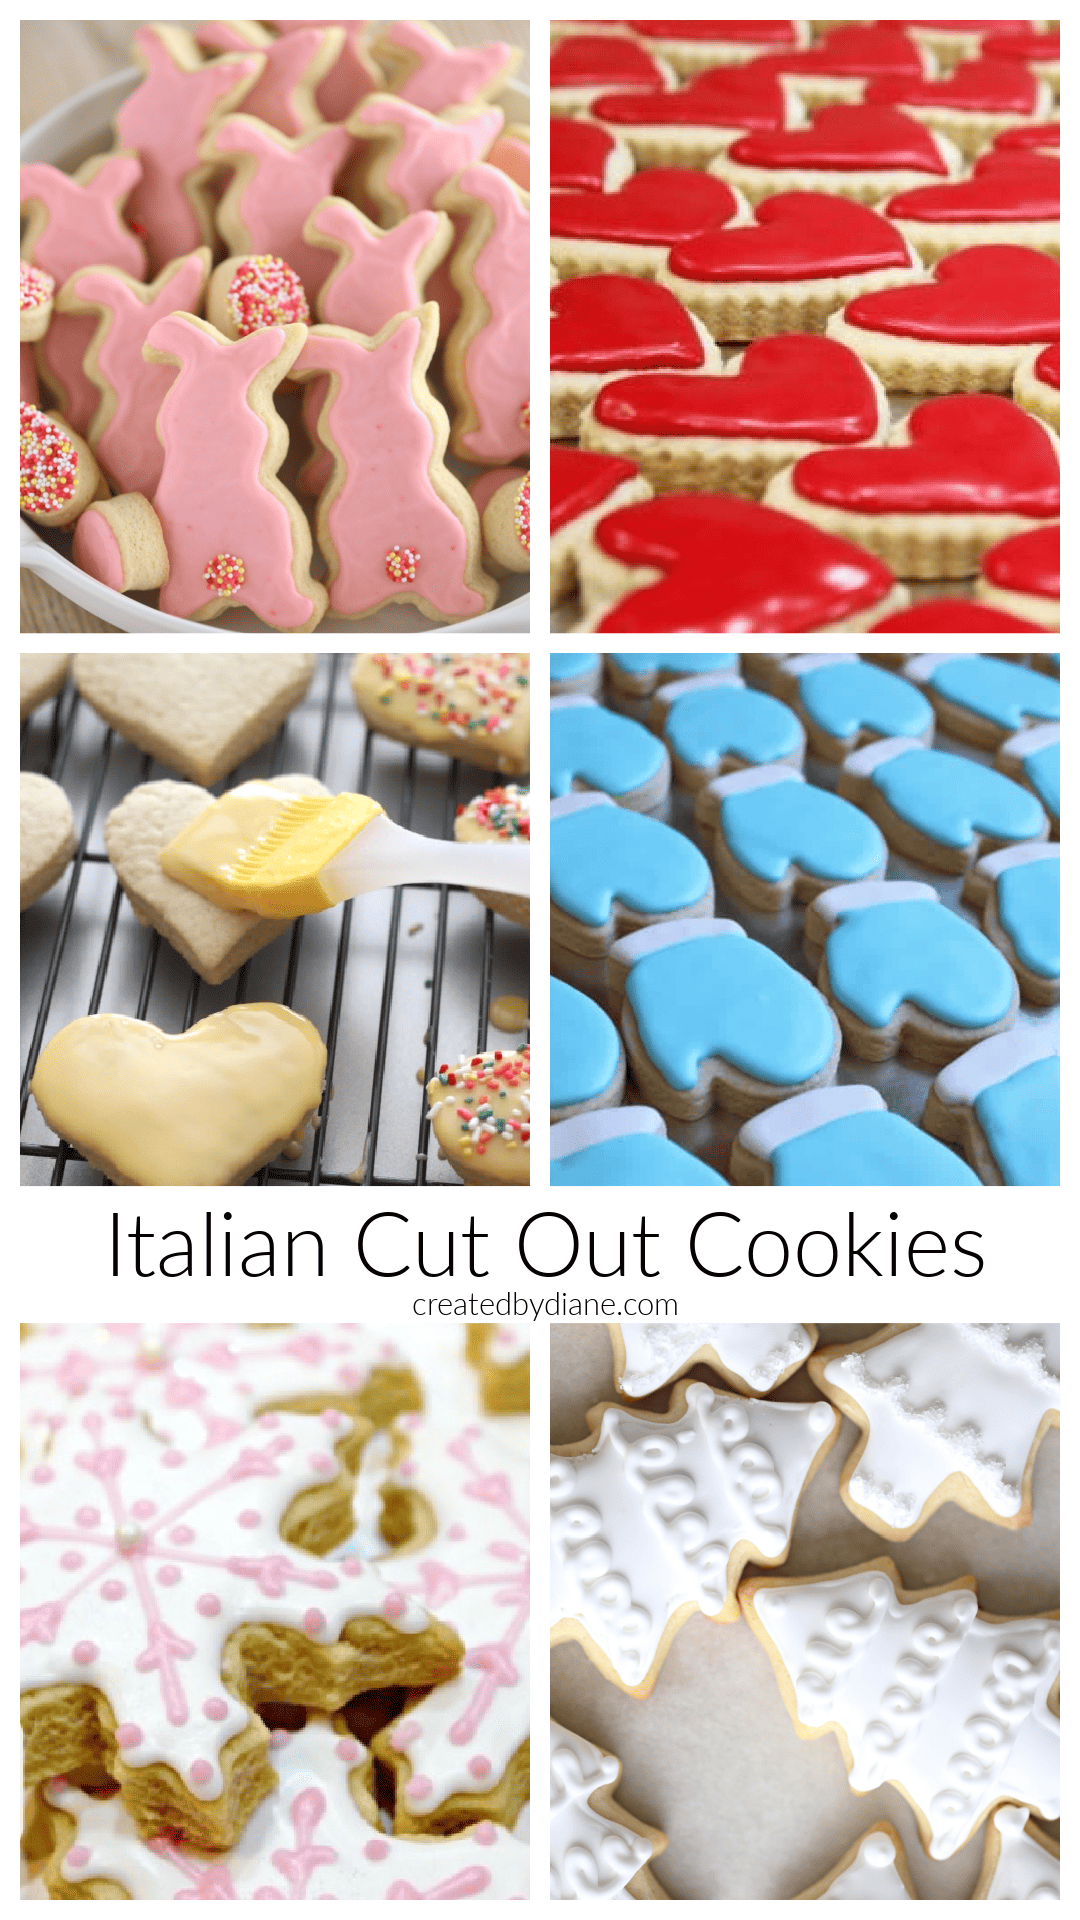 Italian Cookies with glaze icing